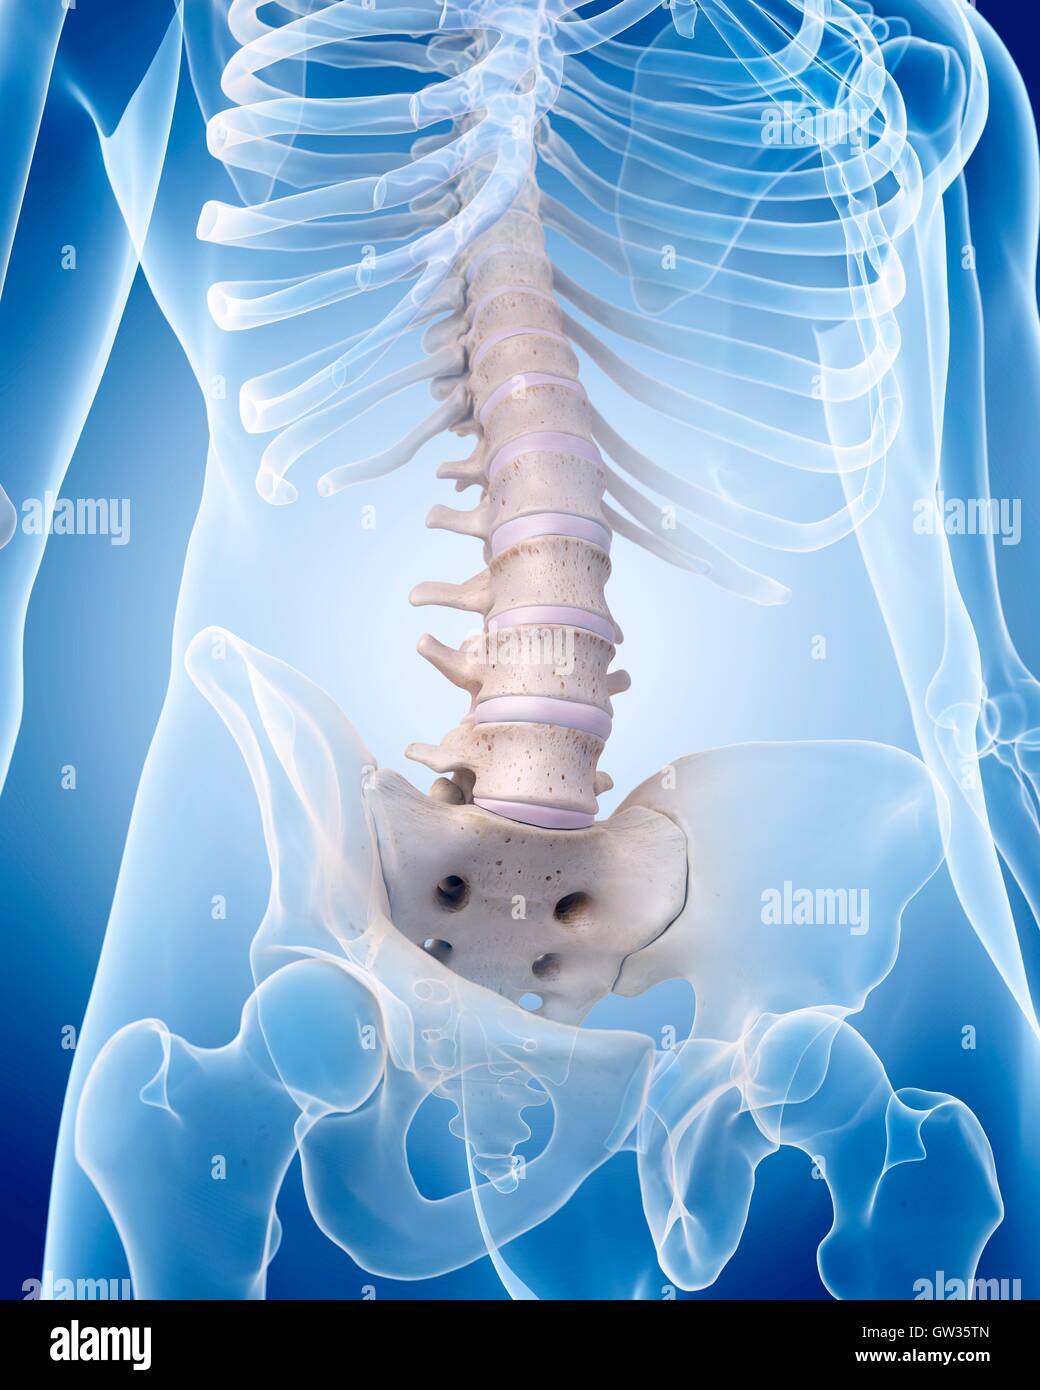 Human lumbar spine, illustration. Stock Photo